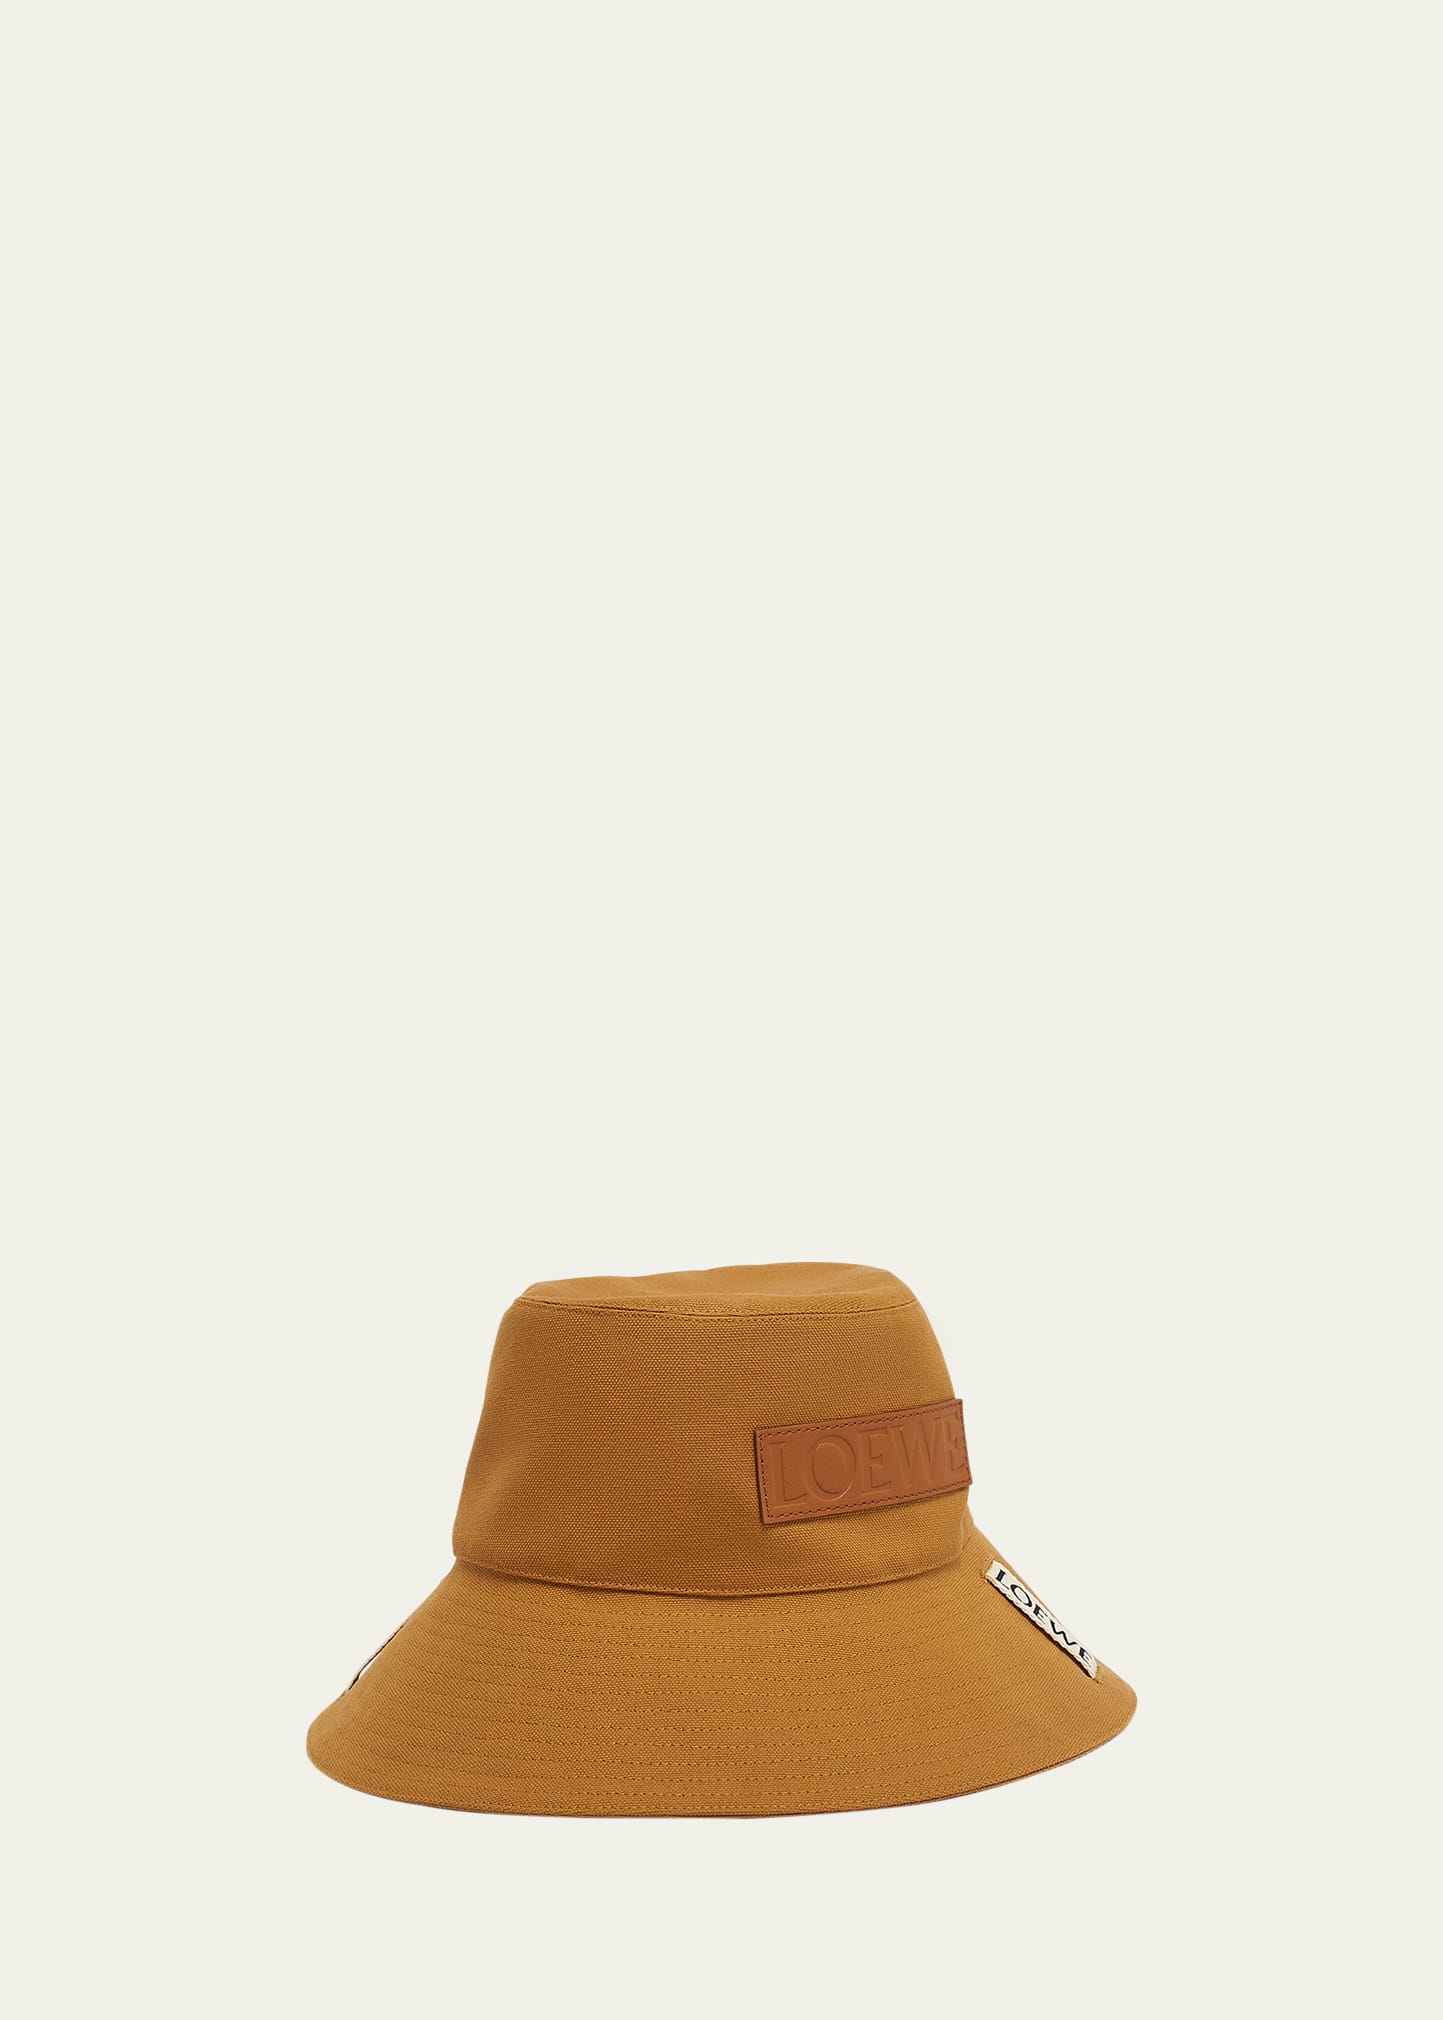 Loewe Fisherman Orange Bucket Hat In Honey Gold